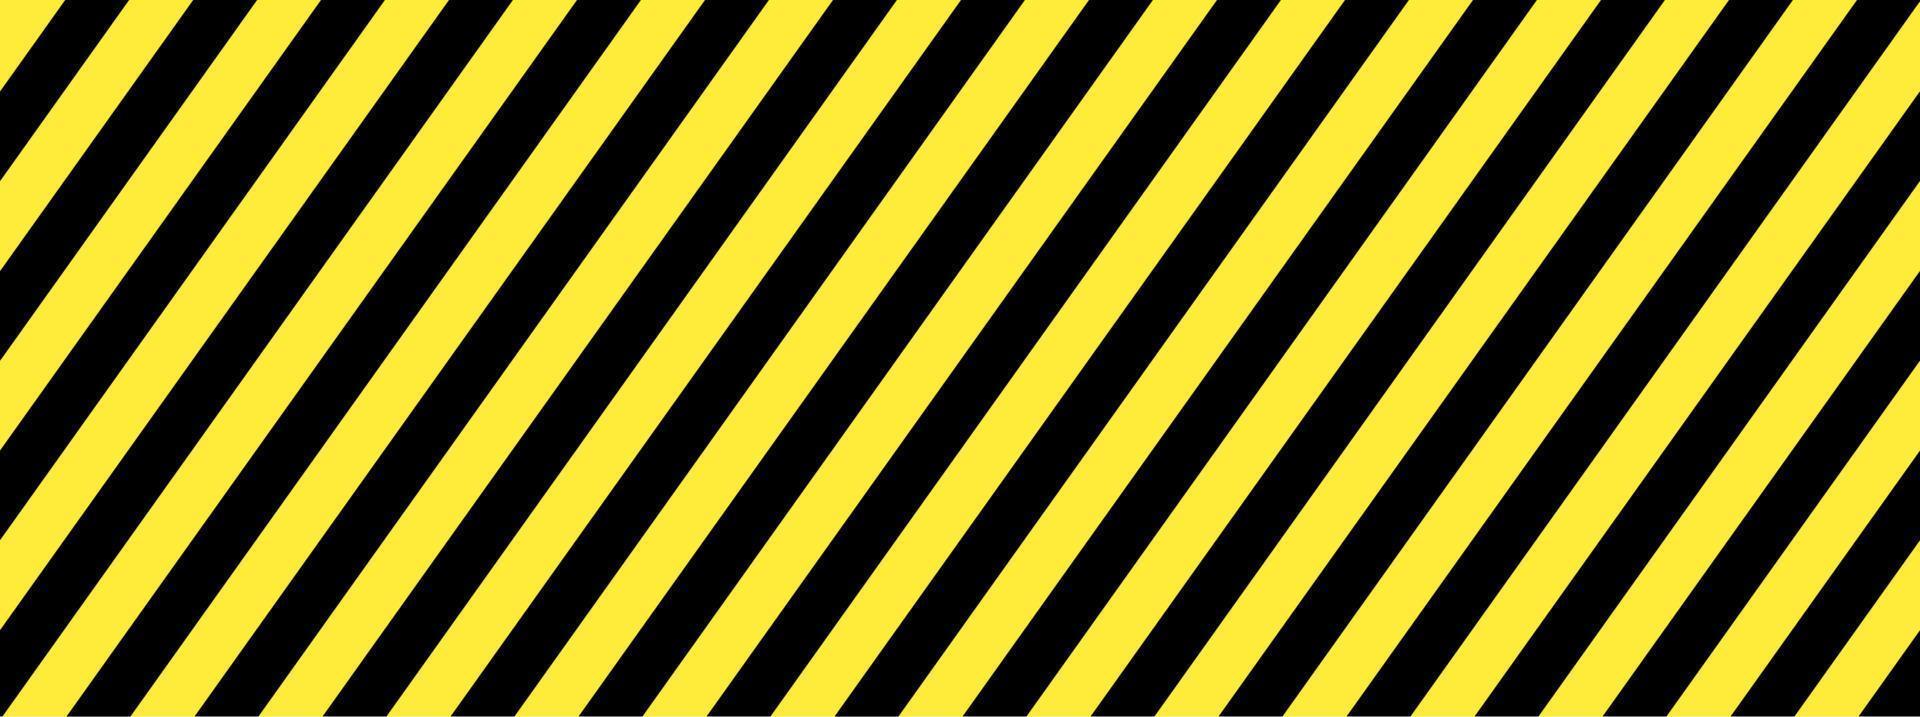 black yellow diagonal striped pattern vector